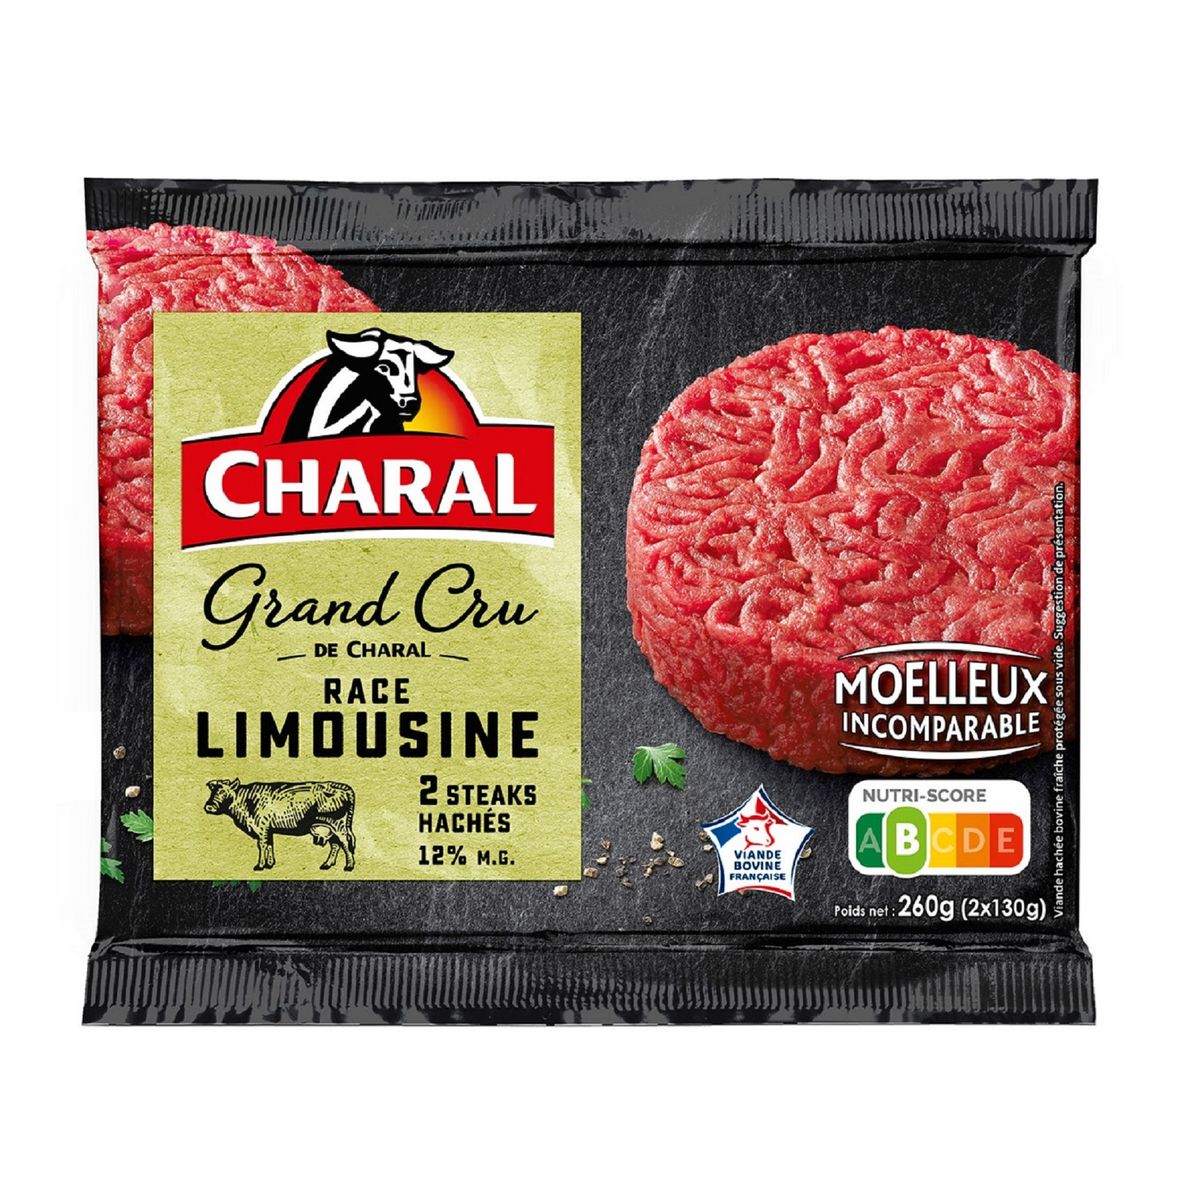 CHARAL Grand cru steaks hachés race limousine 12%mg 2 pièces 260g